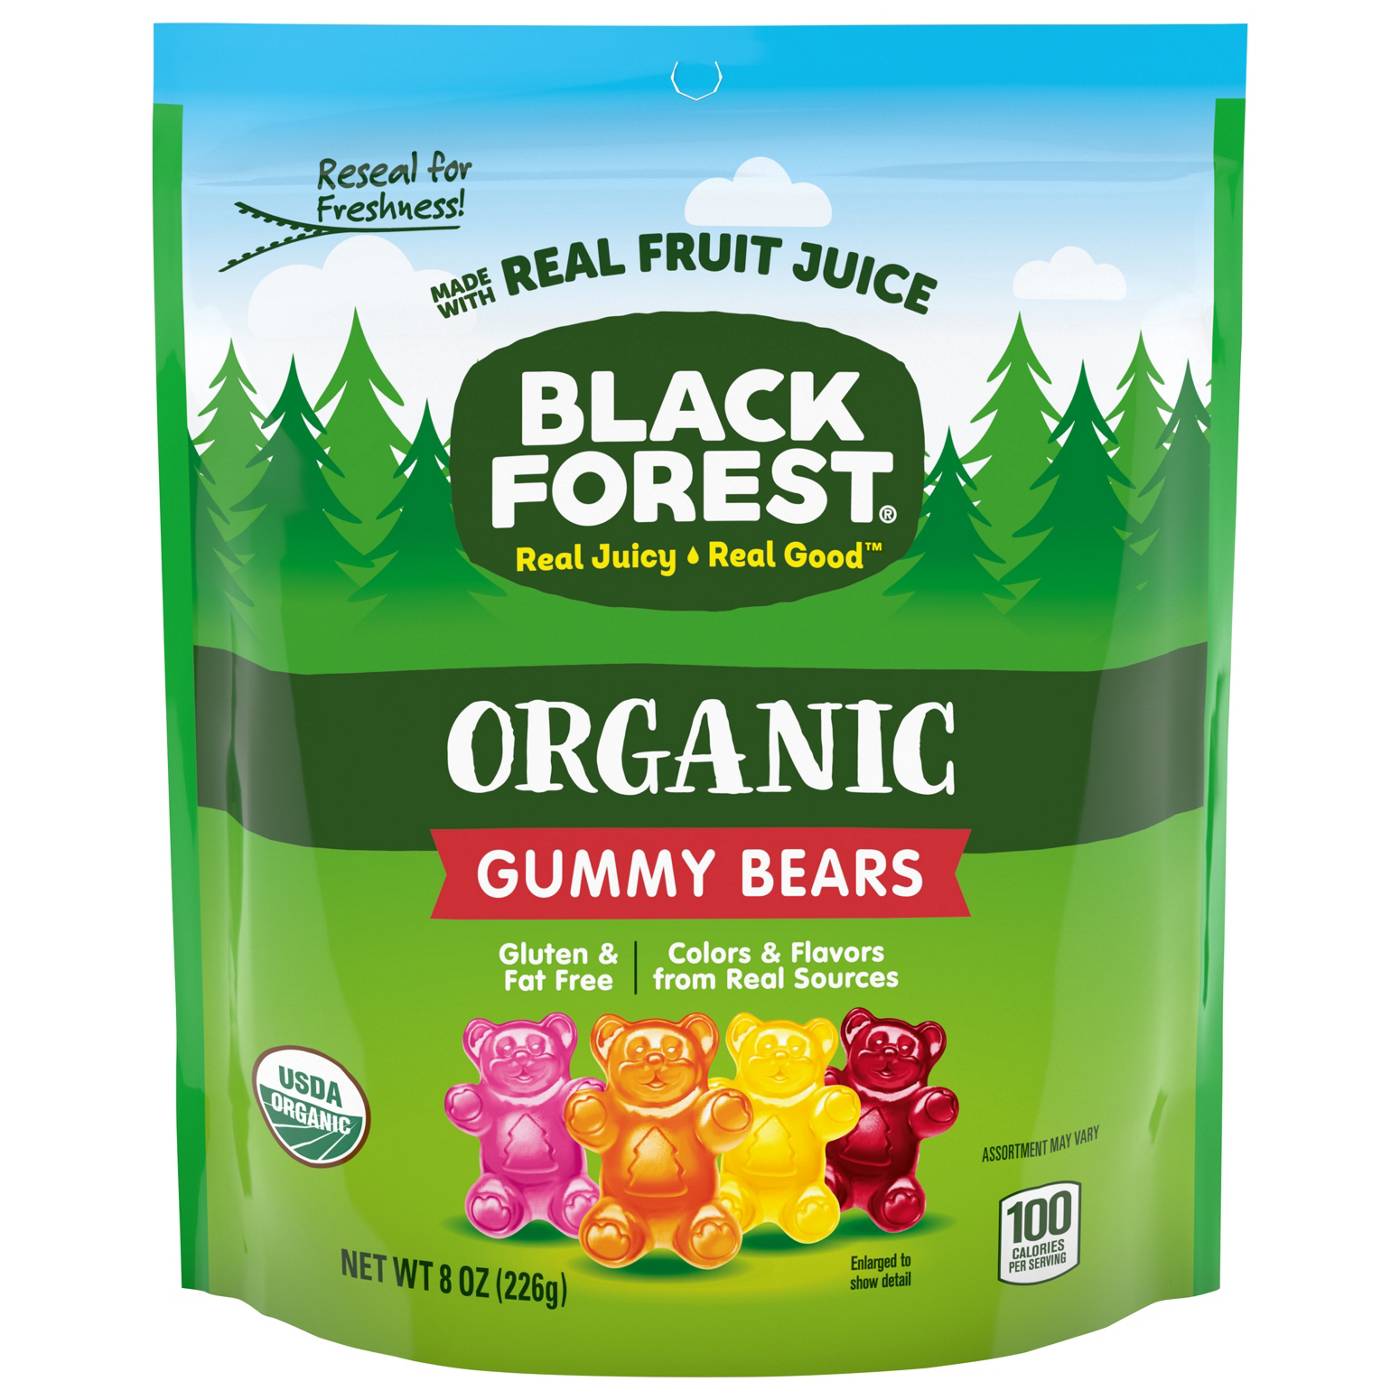 Black Forest Organic Gummy Bears; image 1 of 2